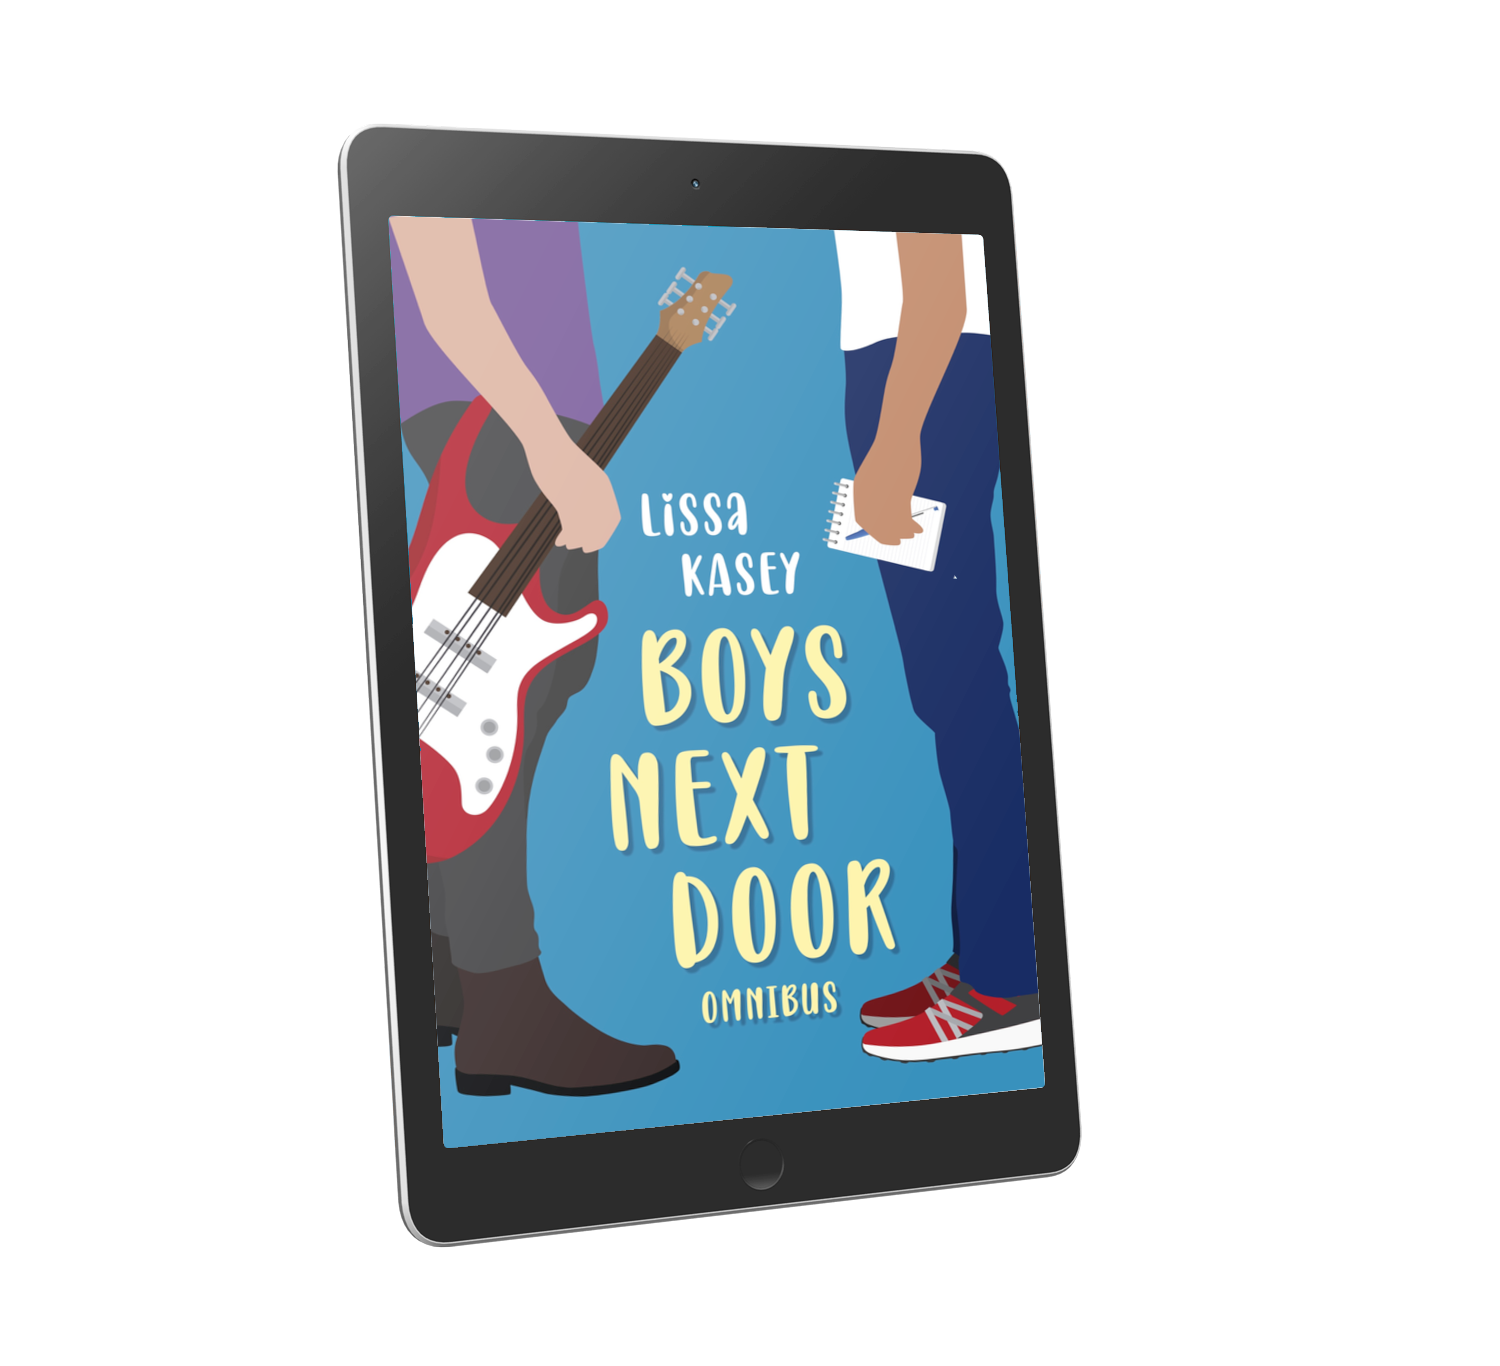 Boys Next Door Omnibus by Lissa Kasey